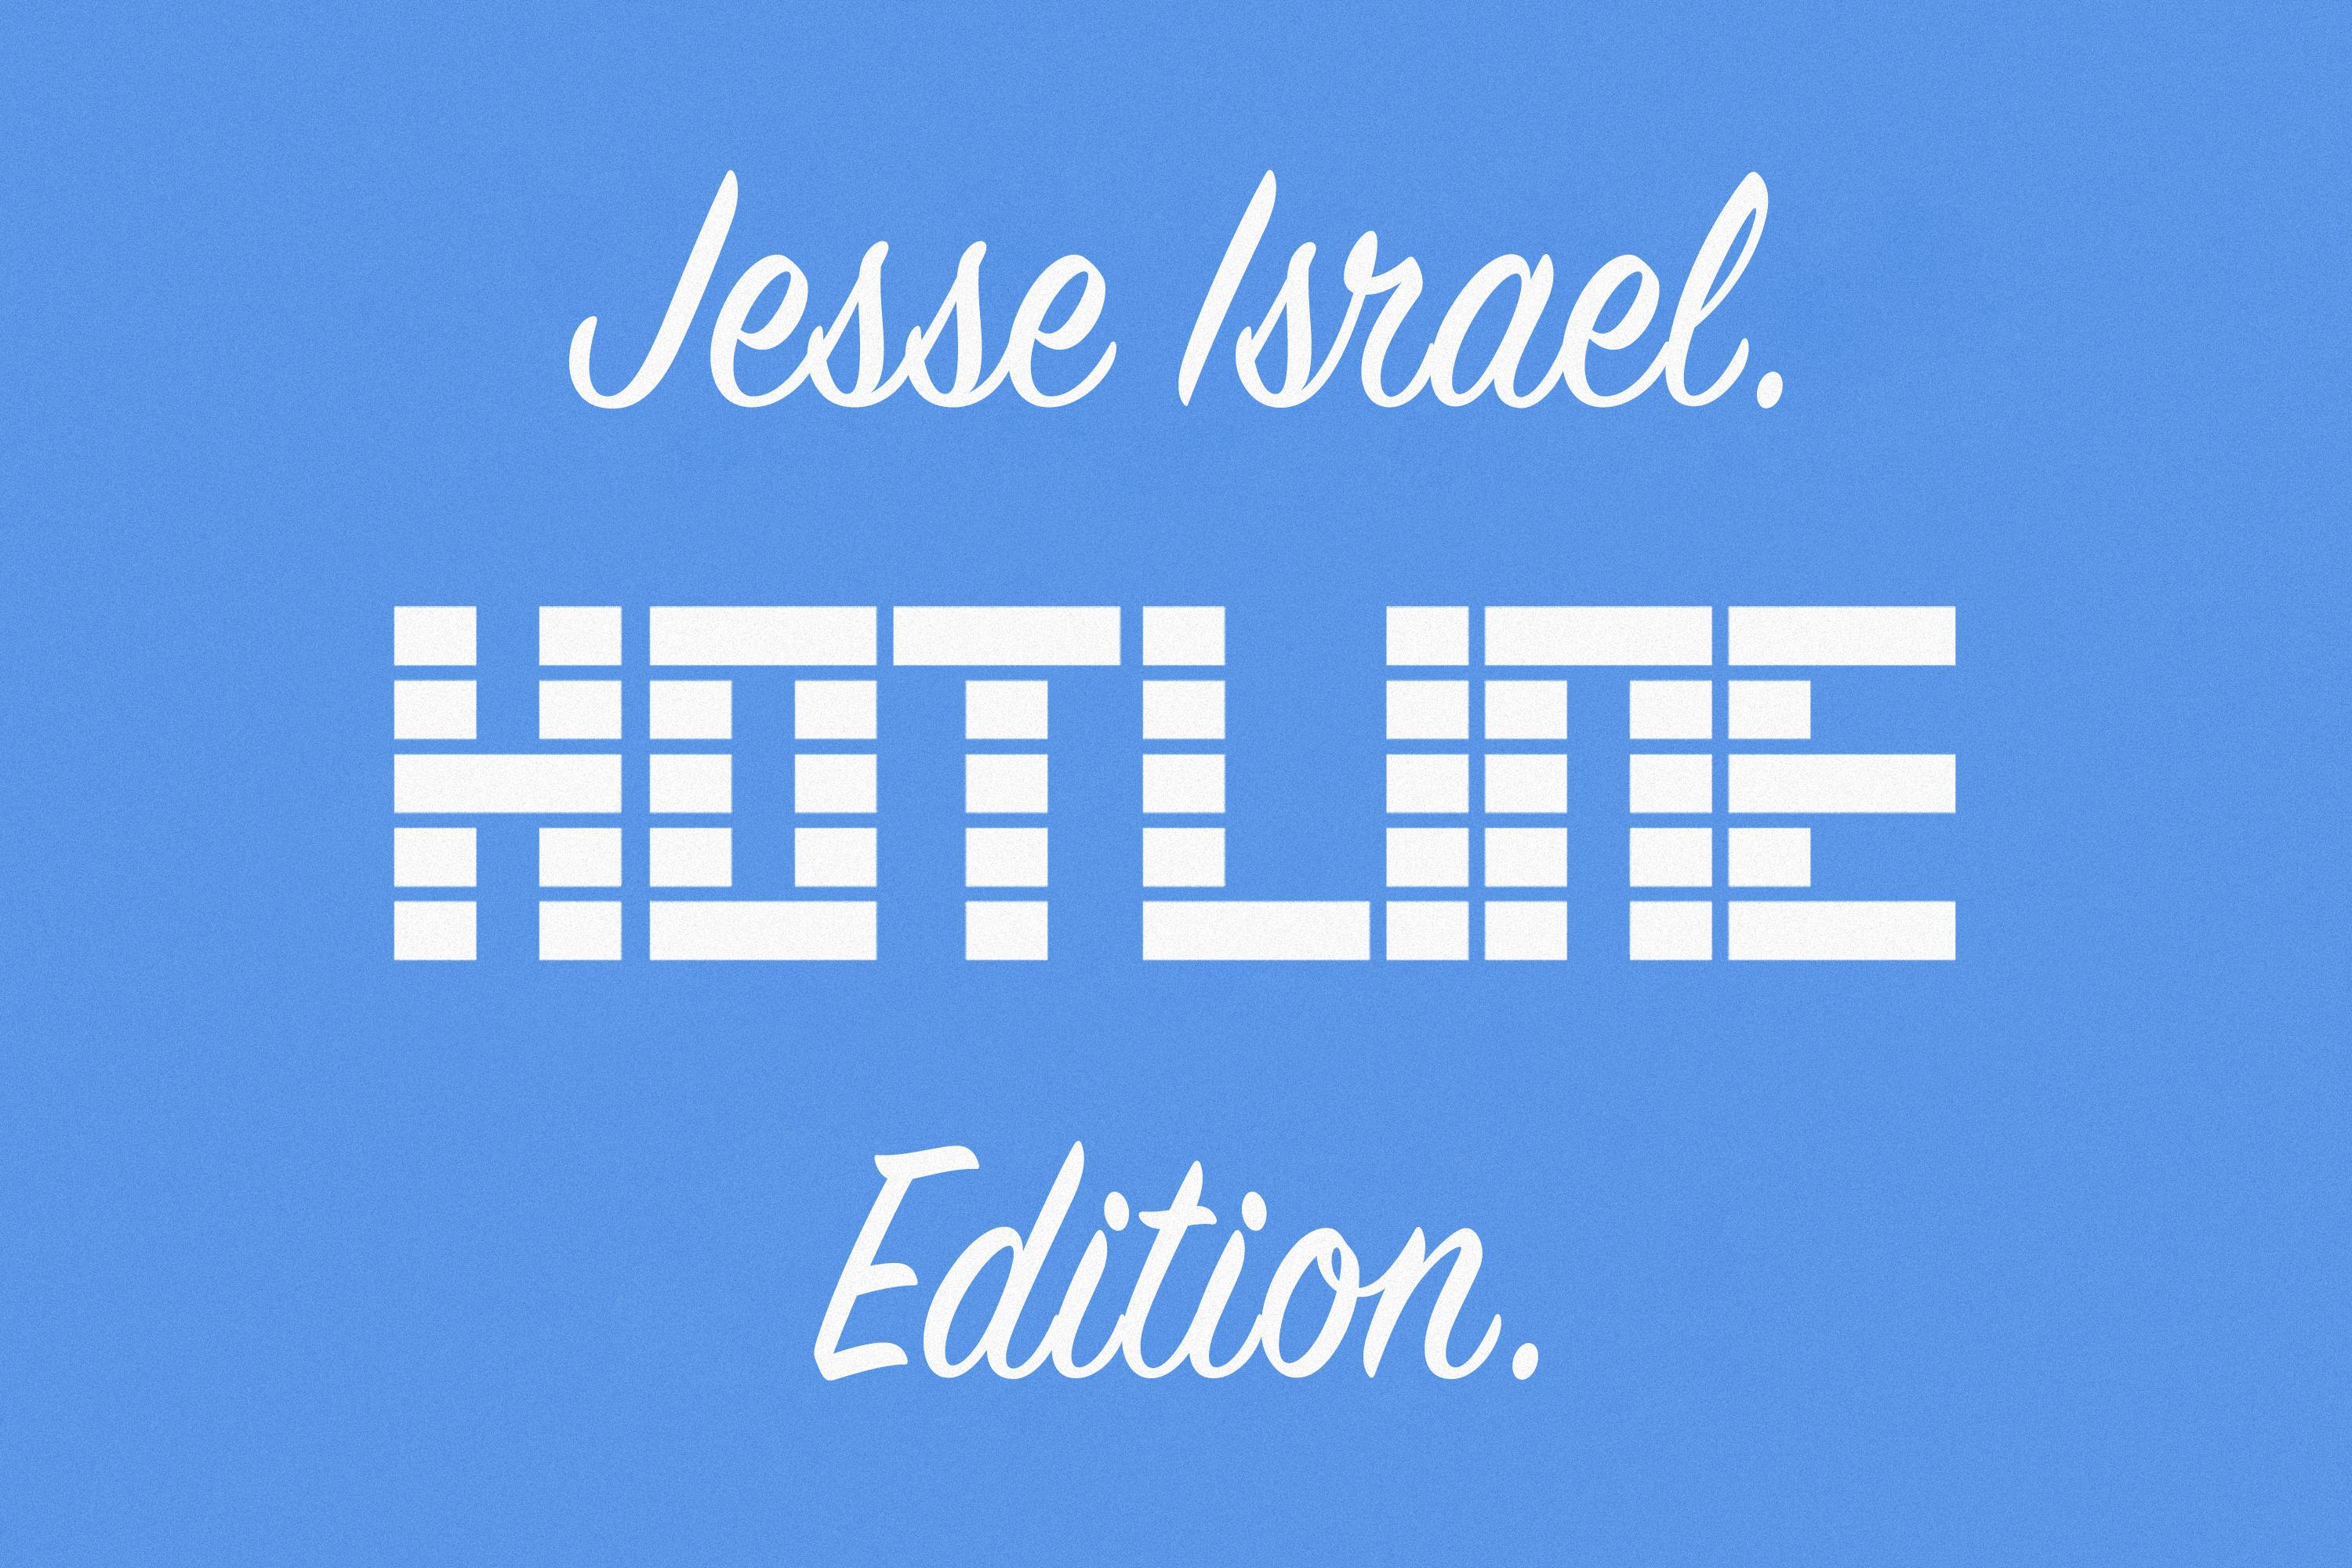 Hotline Roundup: Jesse Israel Edition